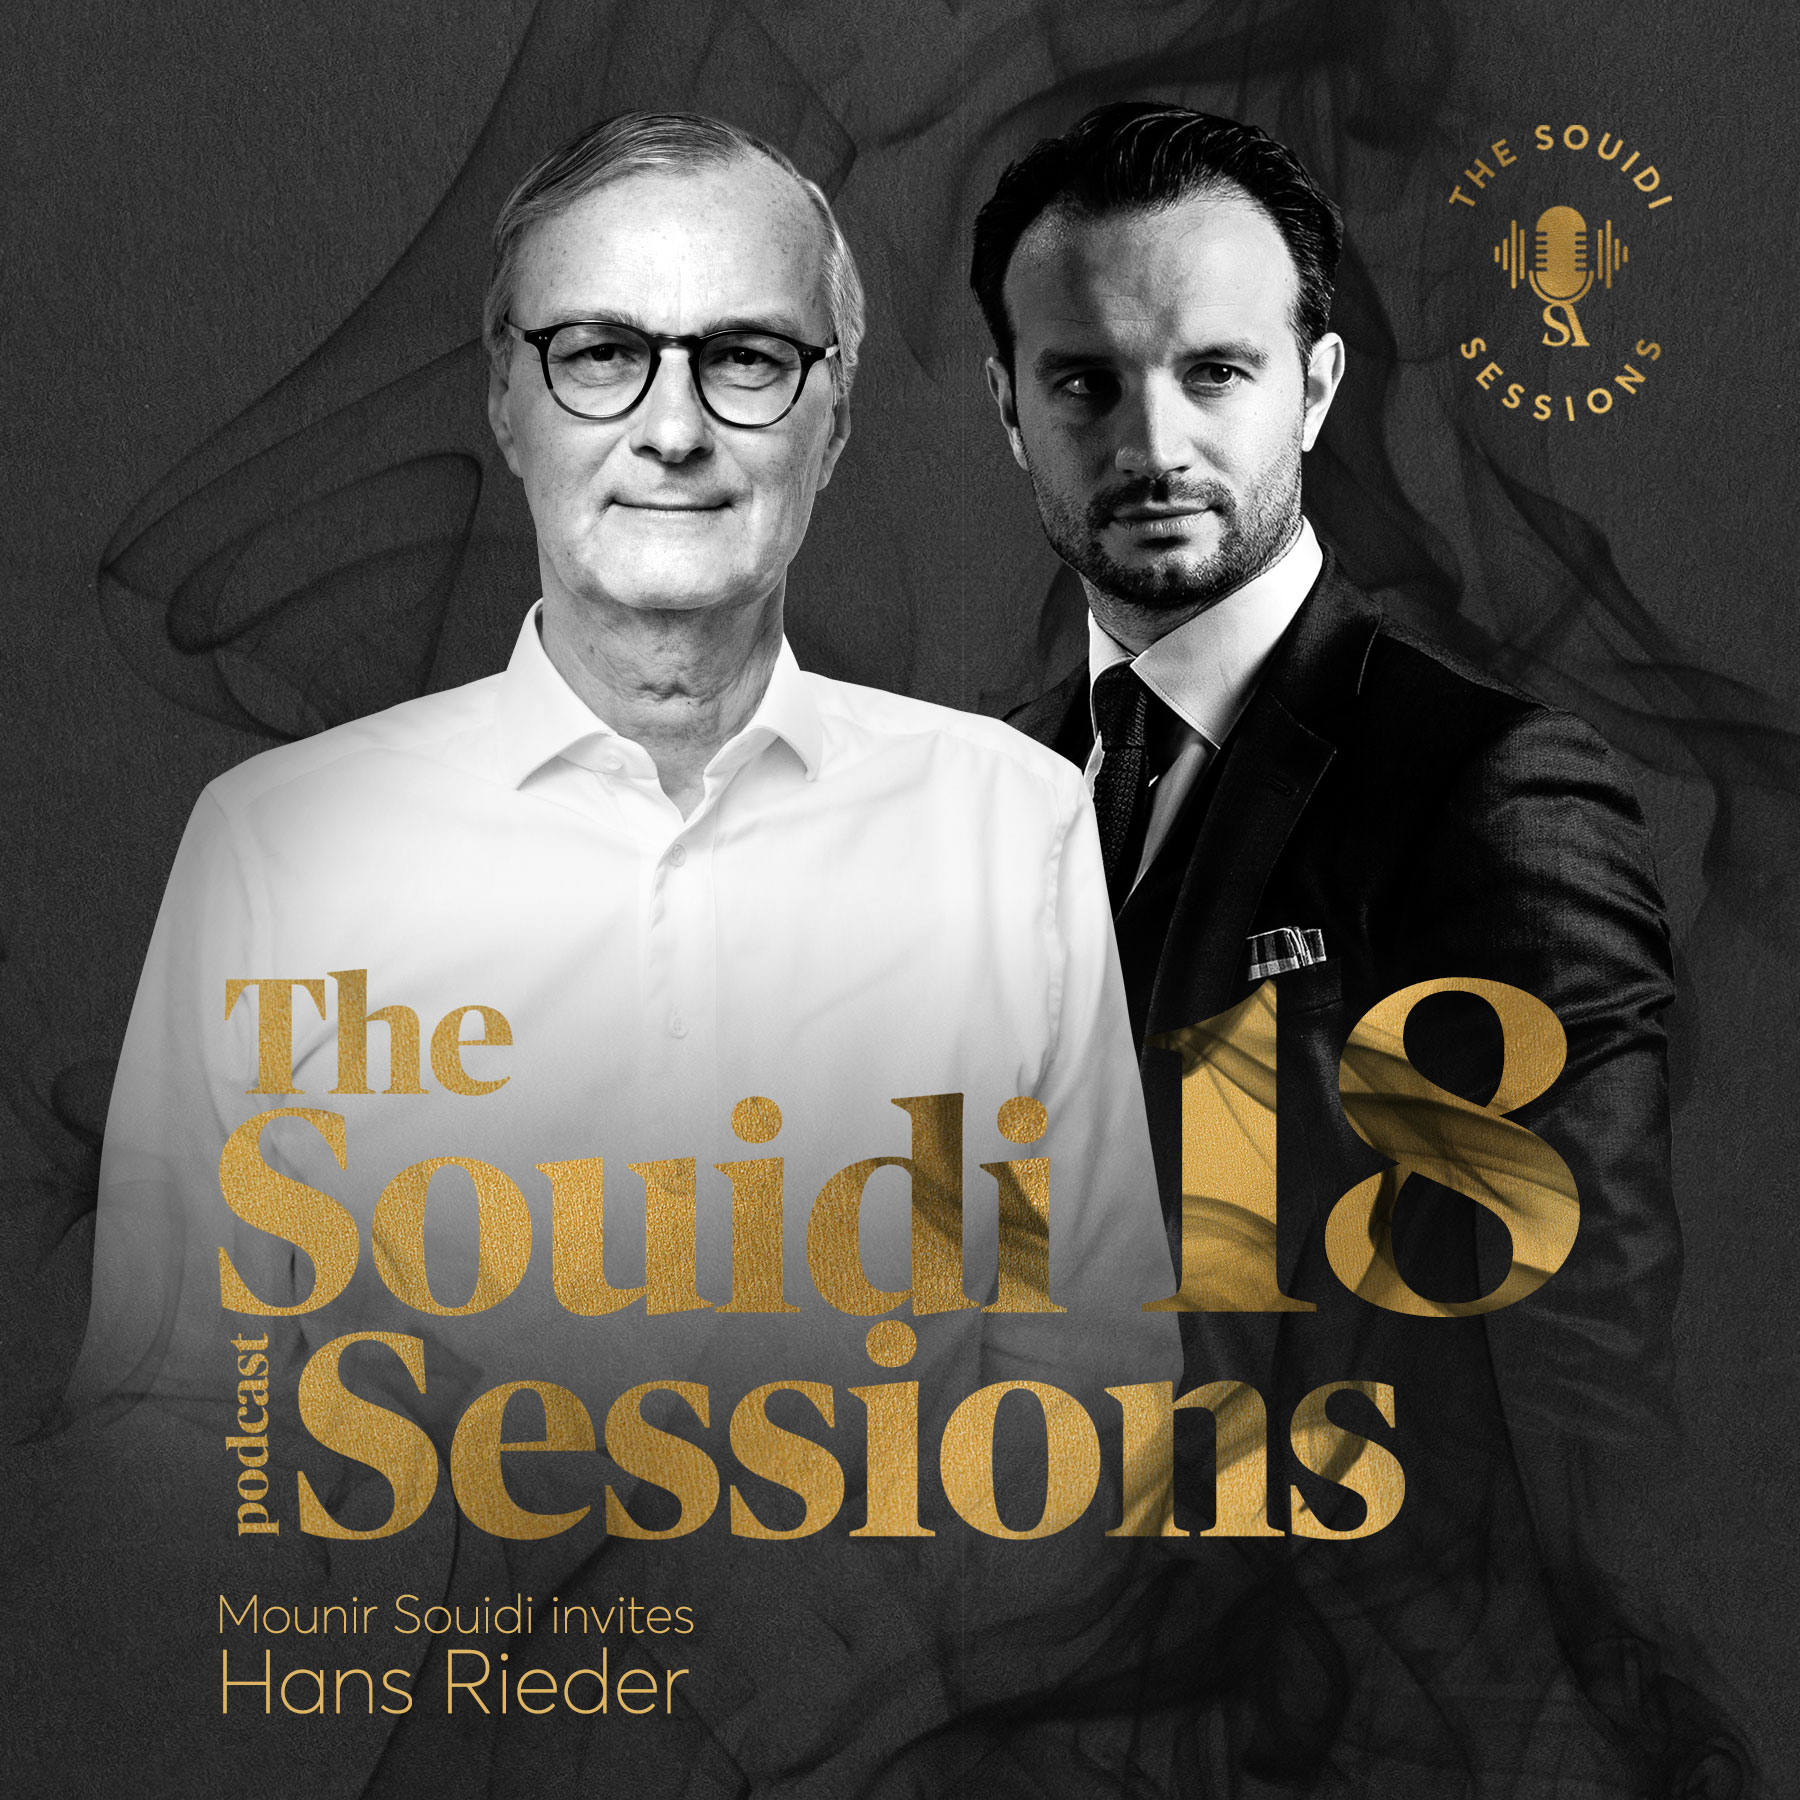 Souidi sessions met Hans Rieder